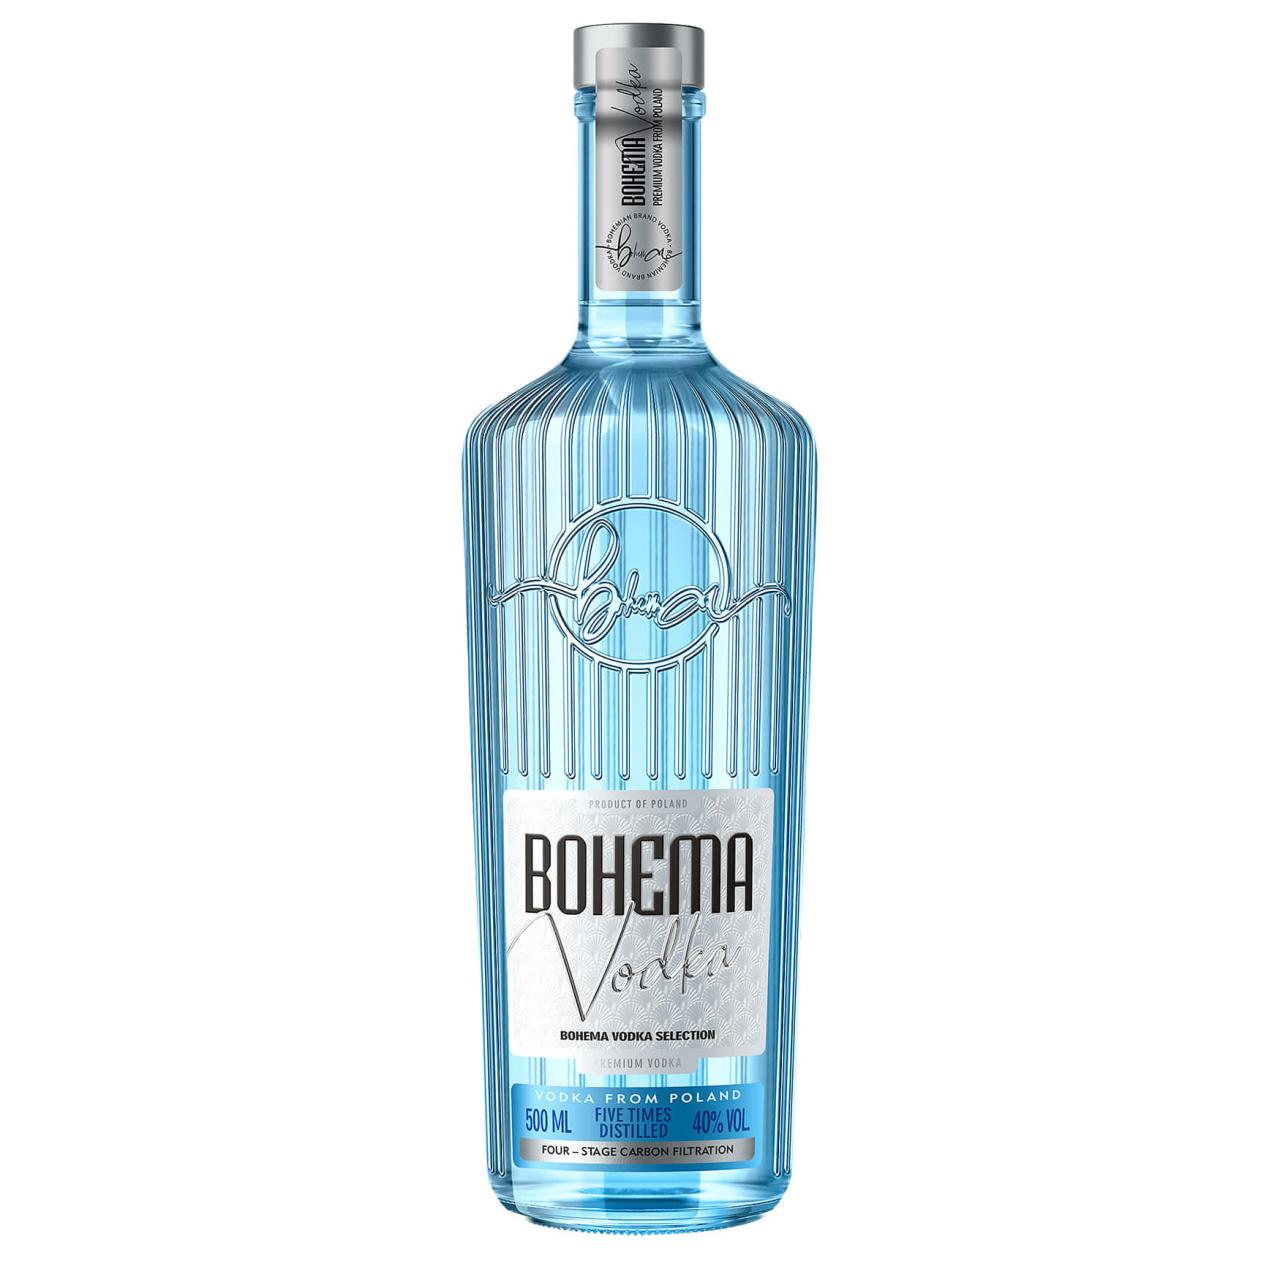 Bohema Vodka 40% 0,5l